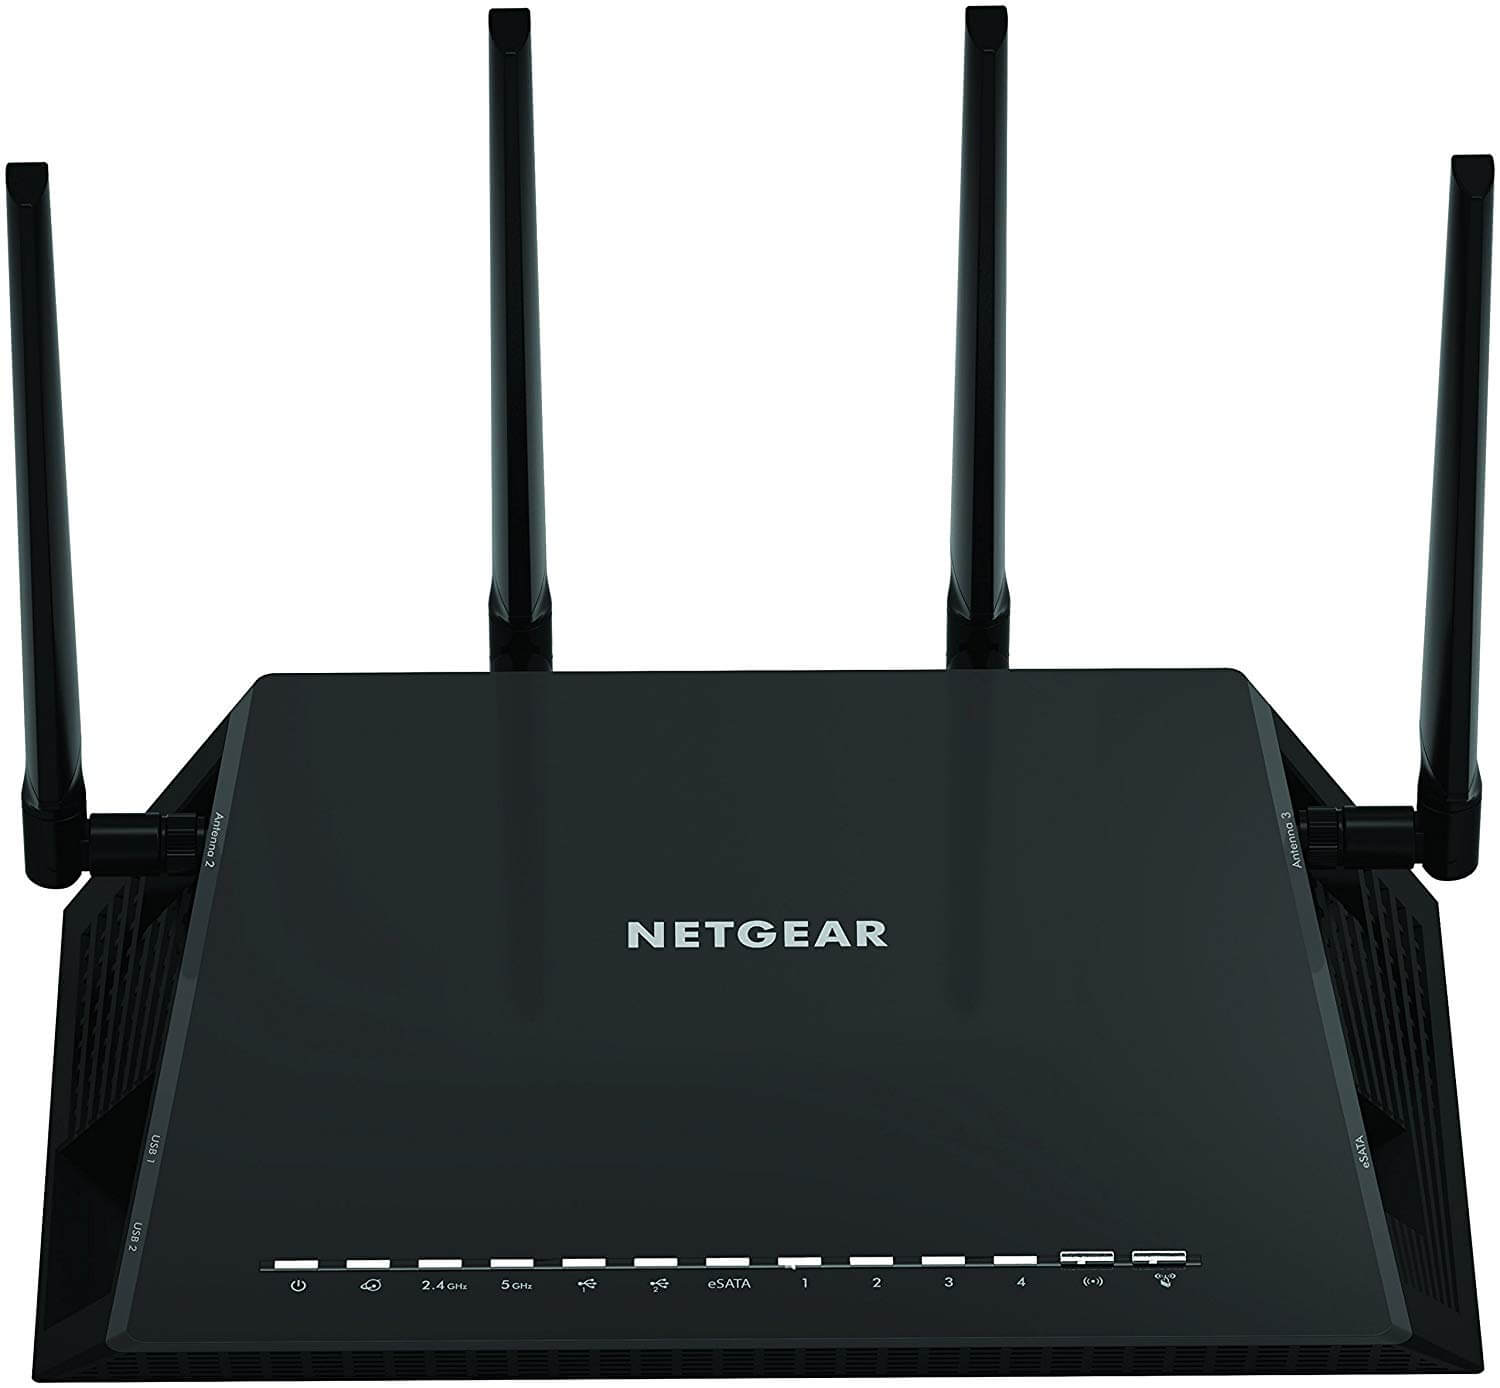 Netgear r7800 - Routers on sale